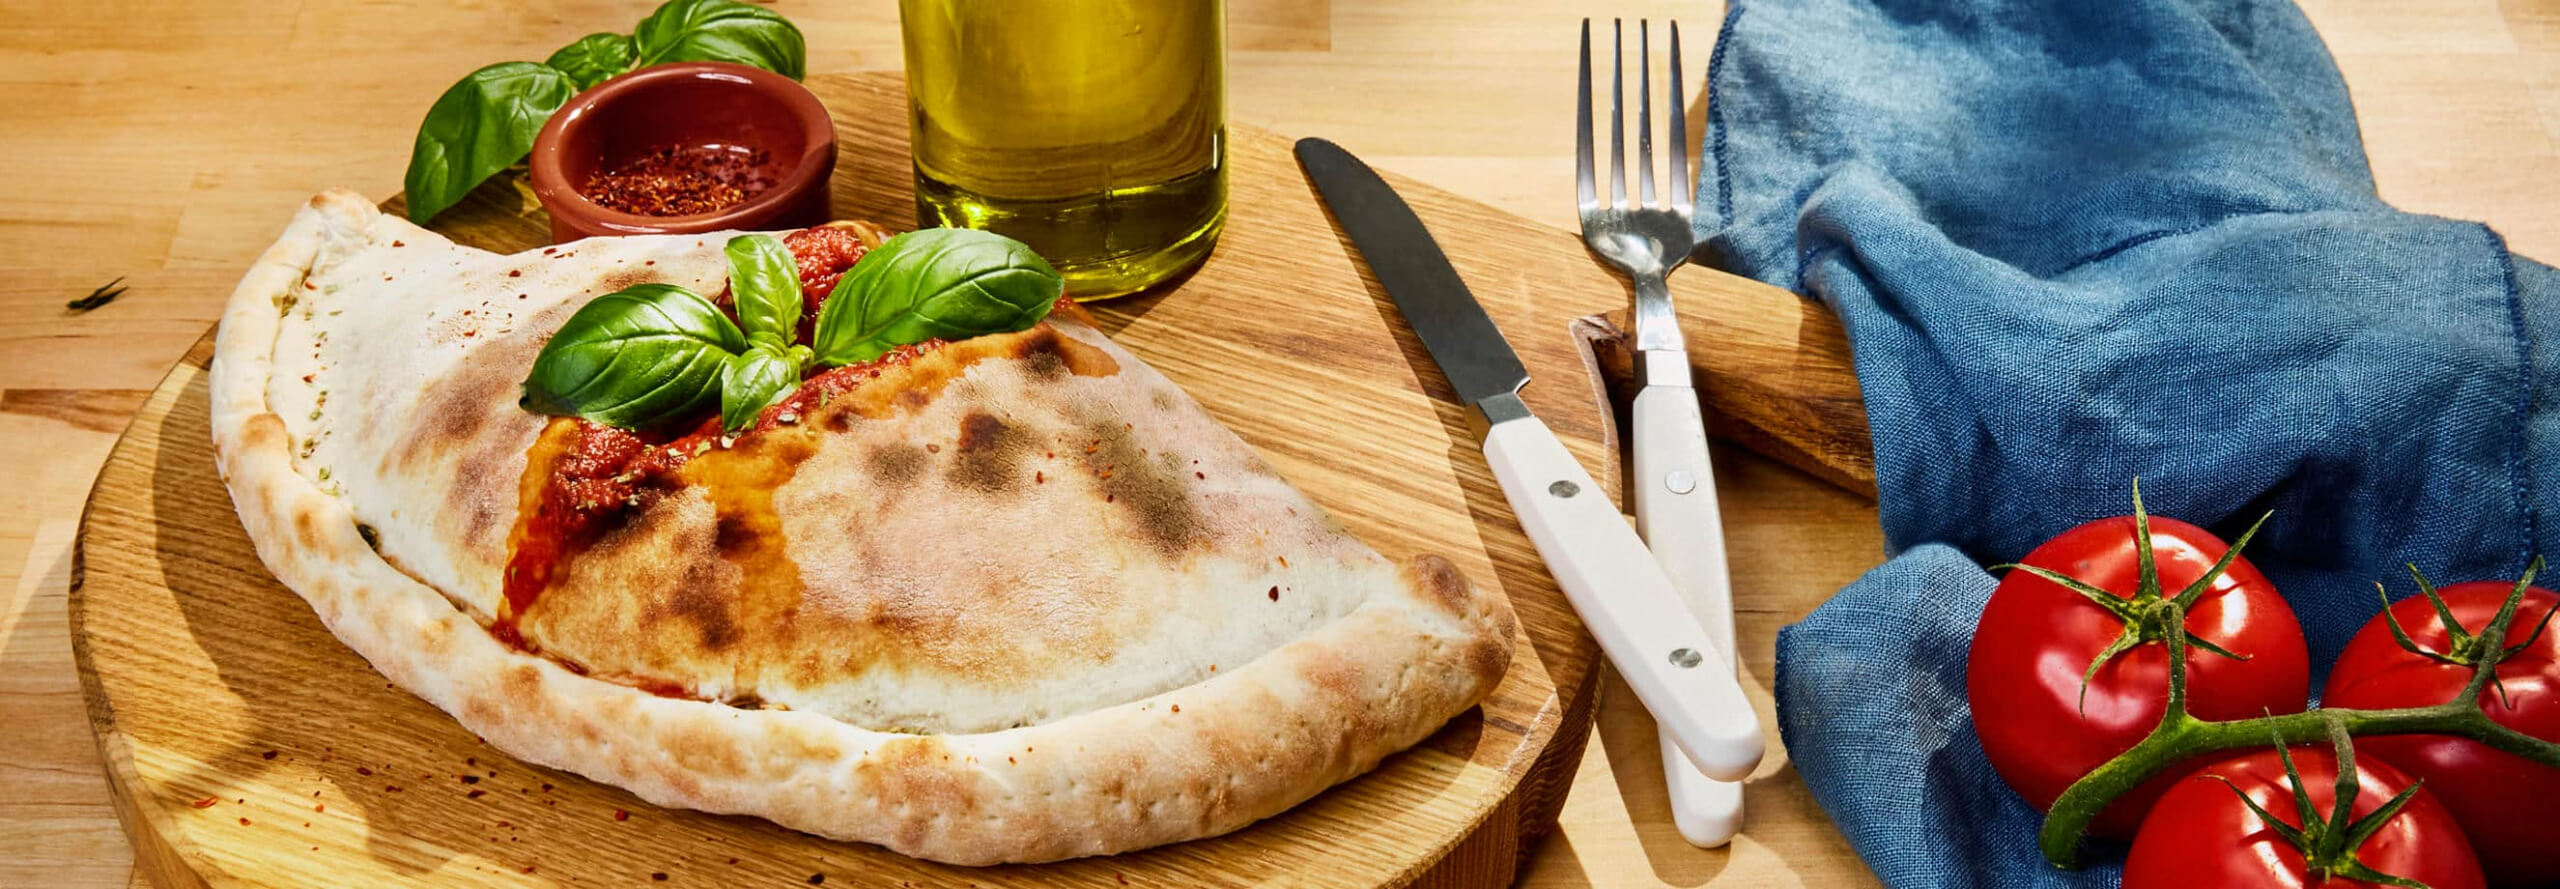 Galbani Mozzarella and Aubergine Calzone Pizza - Galbani